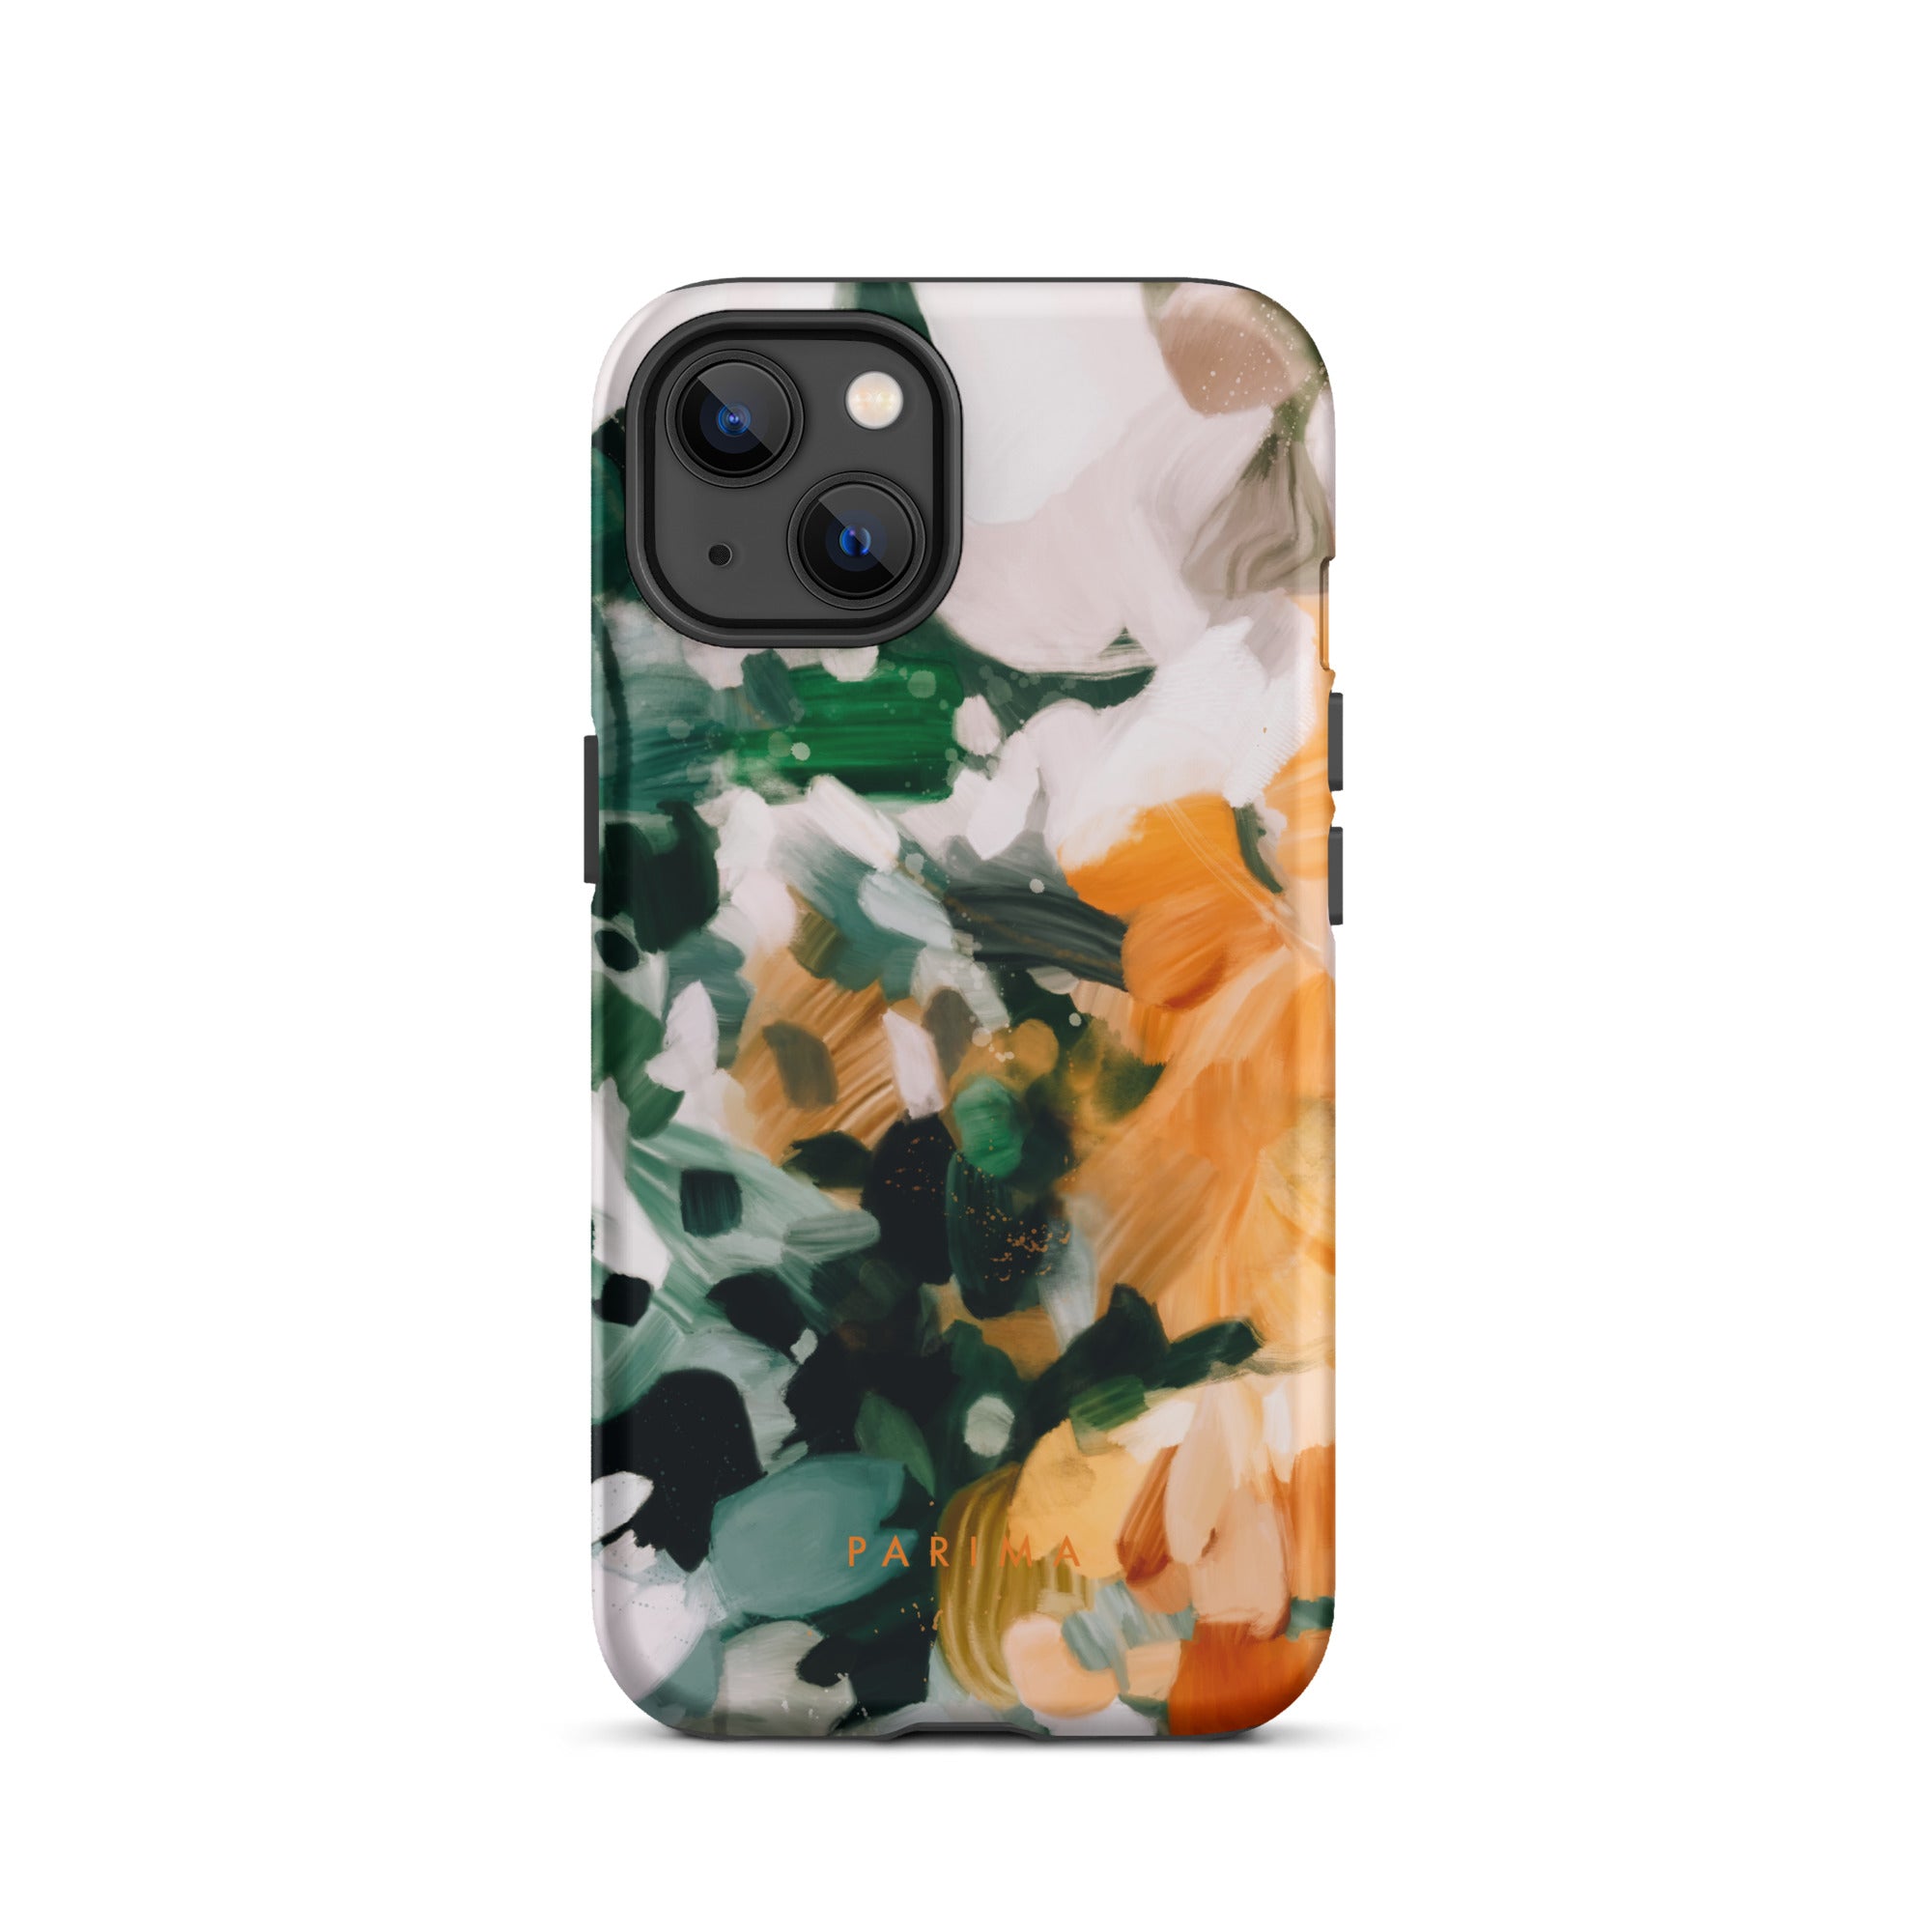 Aspen, green and orange abstract art - iPhone 13 tough case by Parima Studio